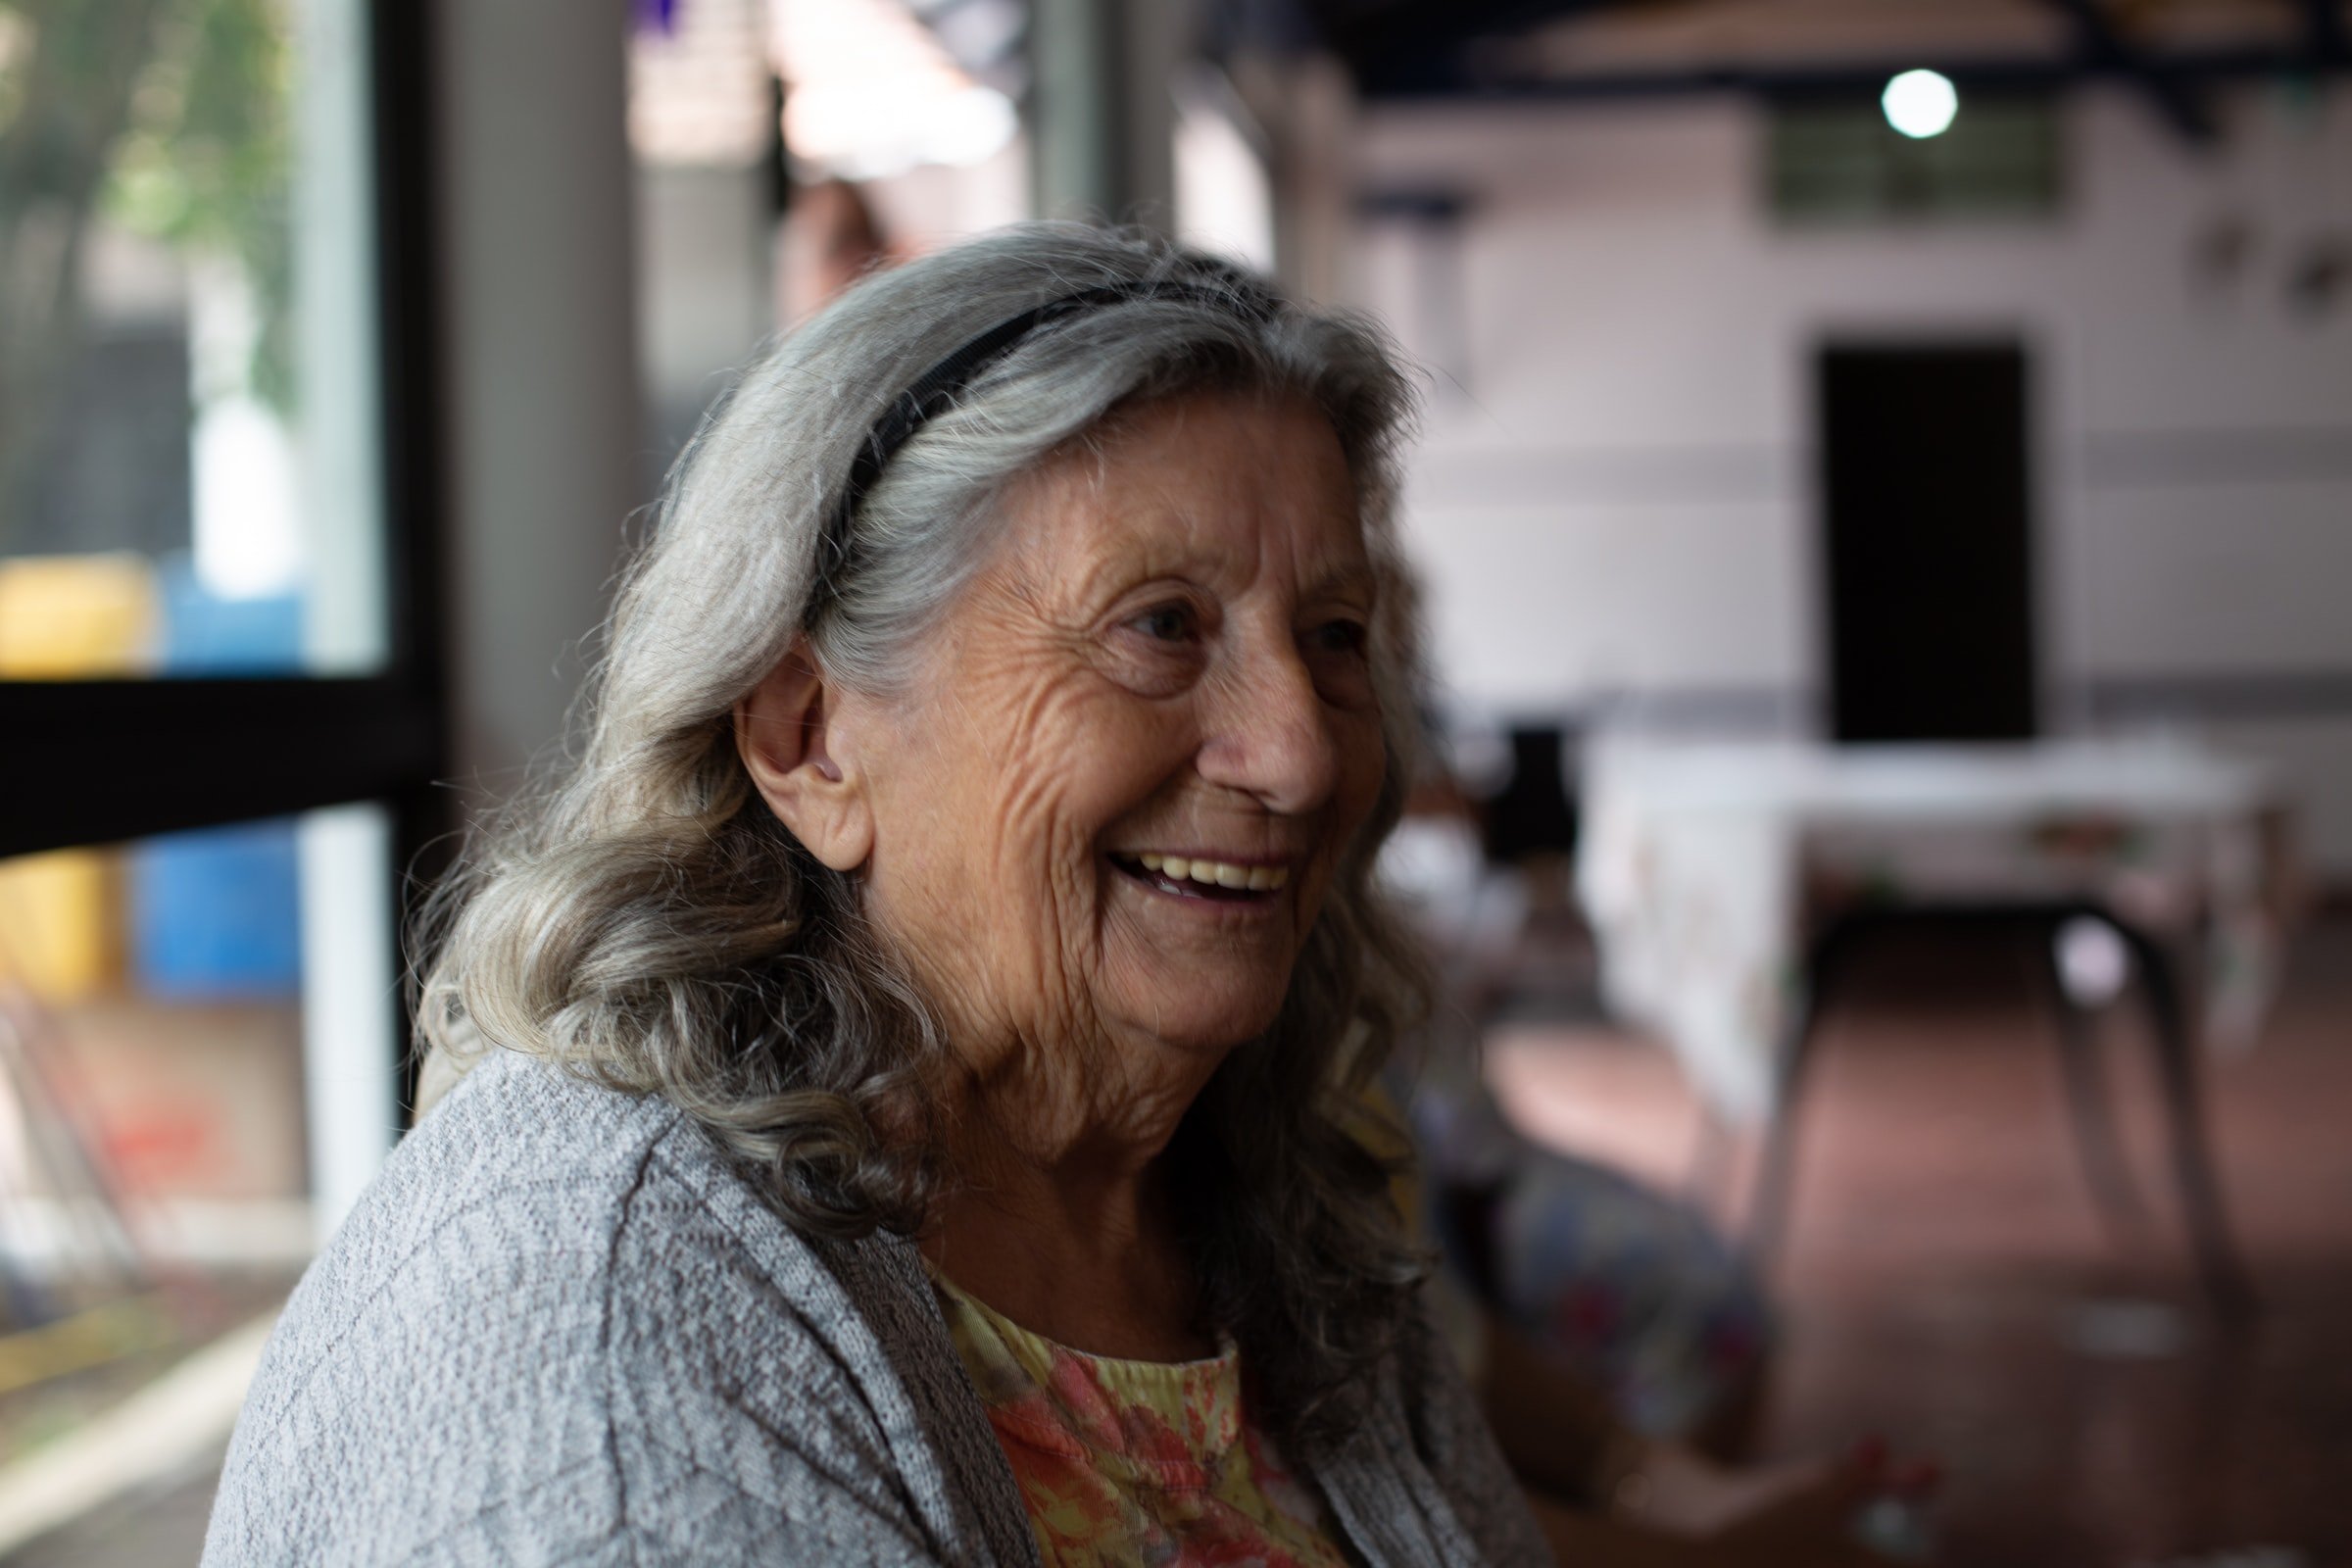 Elderly woman smiling. | Source: Unsplash